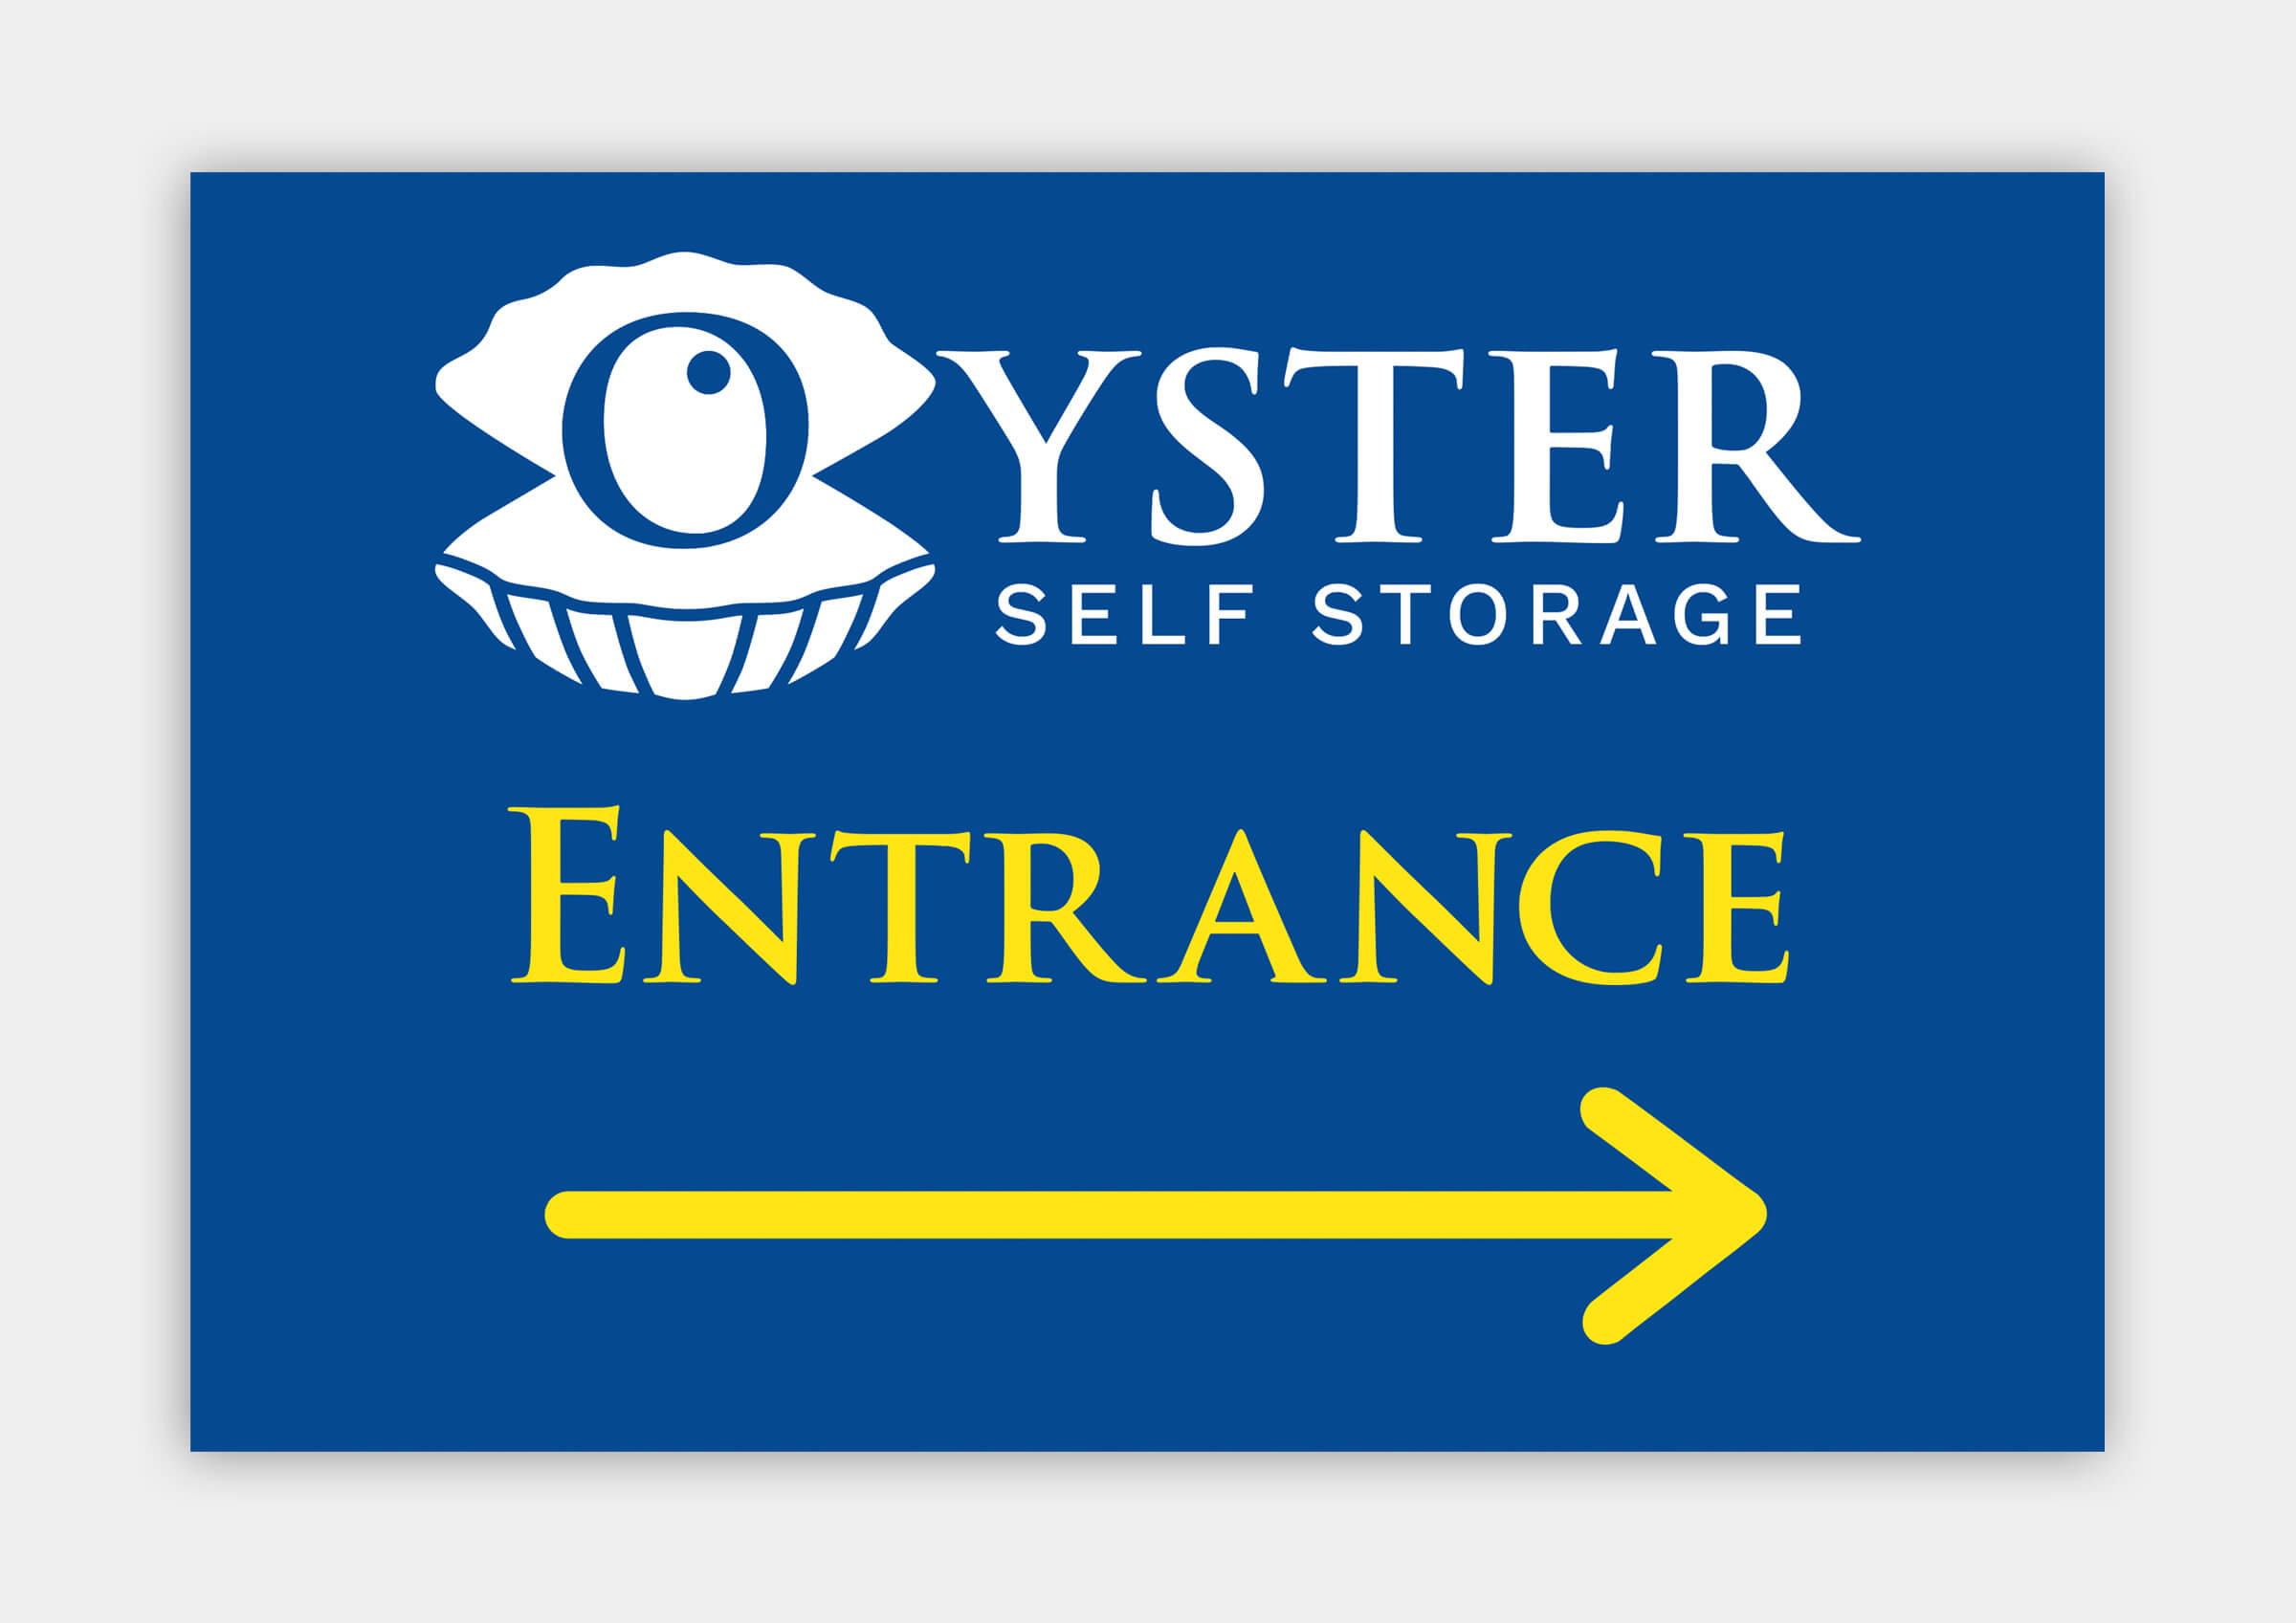 Oyster Self Storage Entrance sign